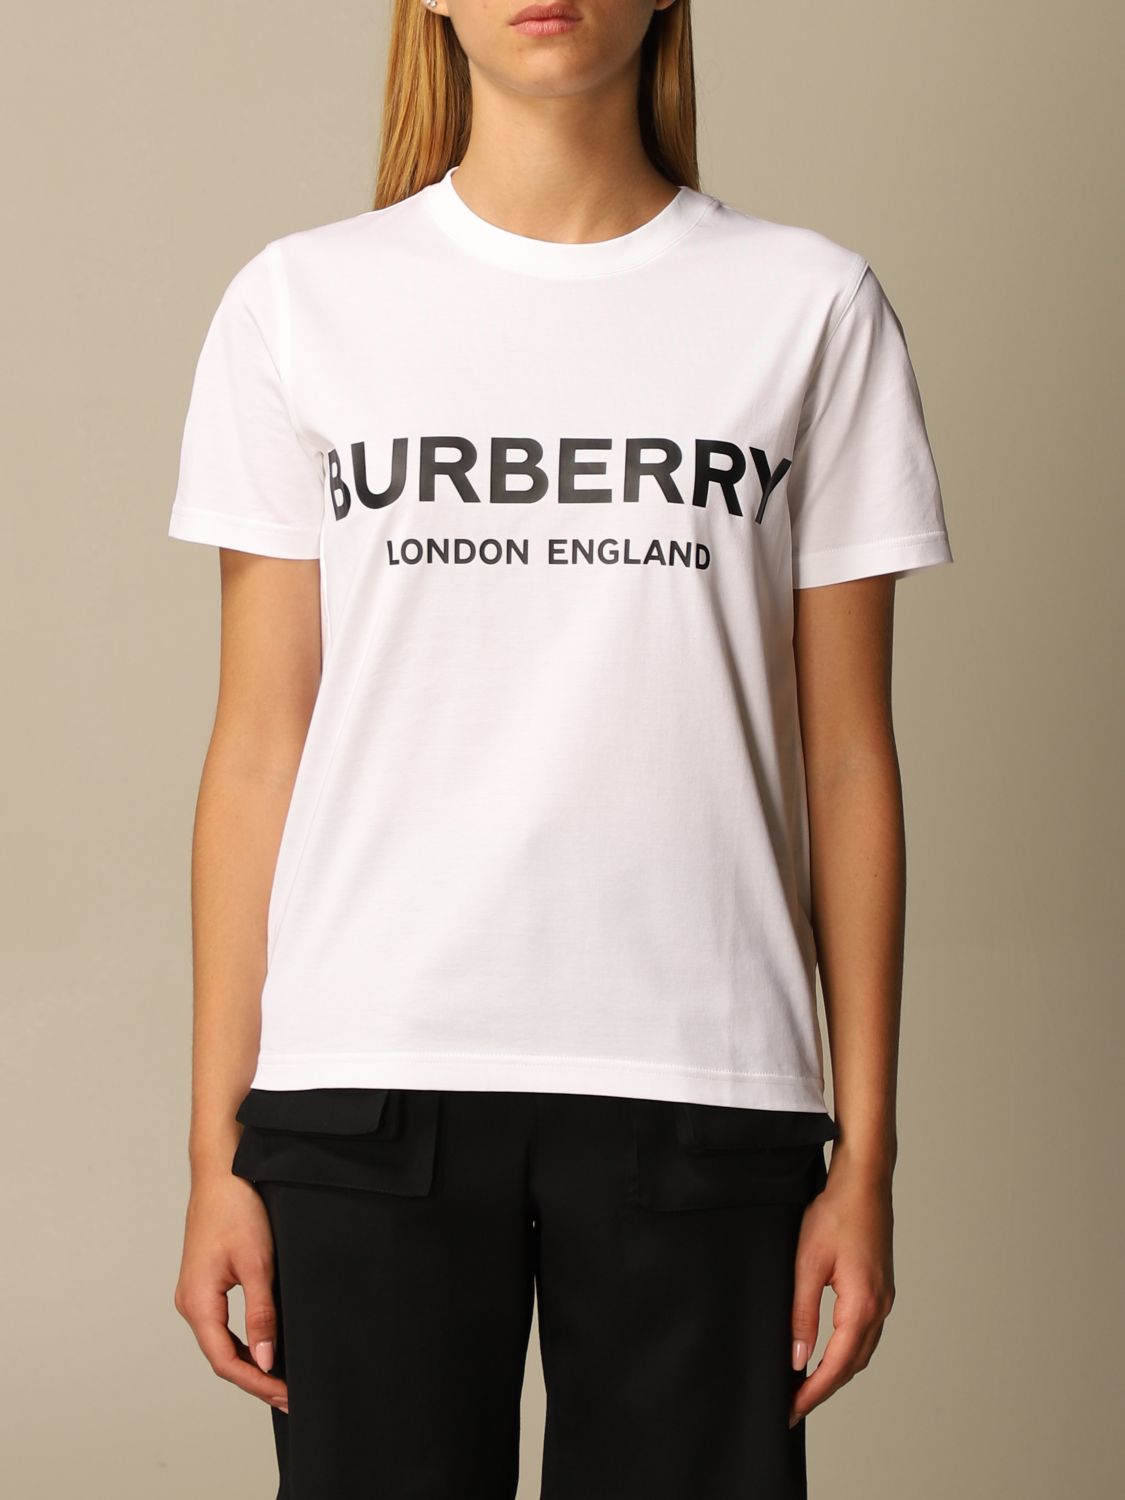 burberry woman shirt